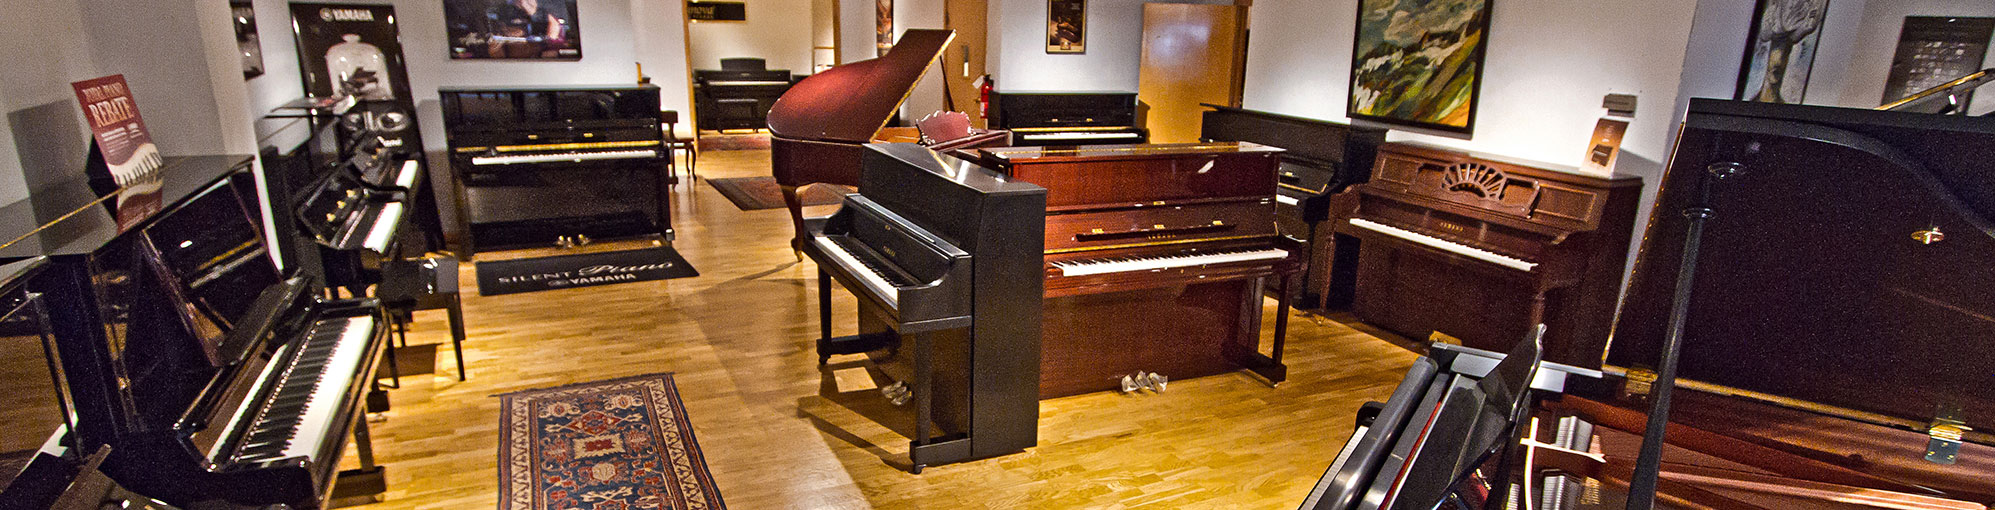 schimmel piano model c120em